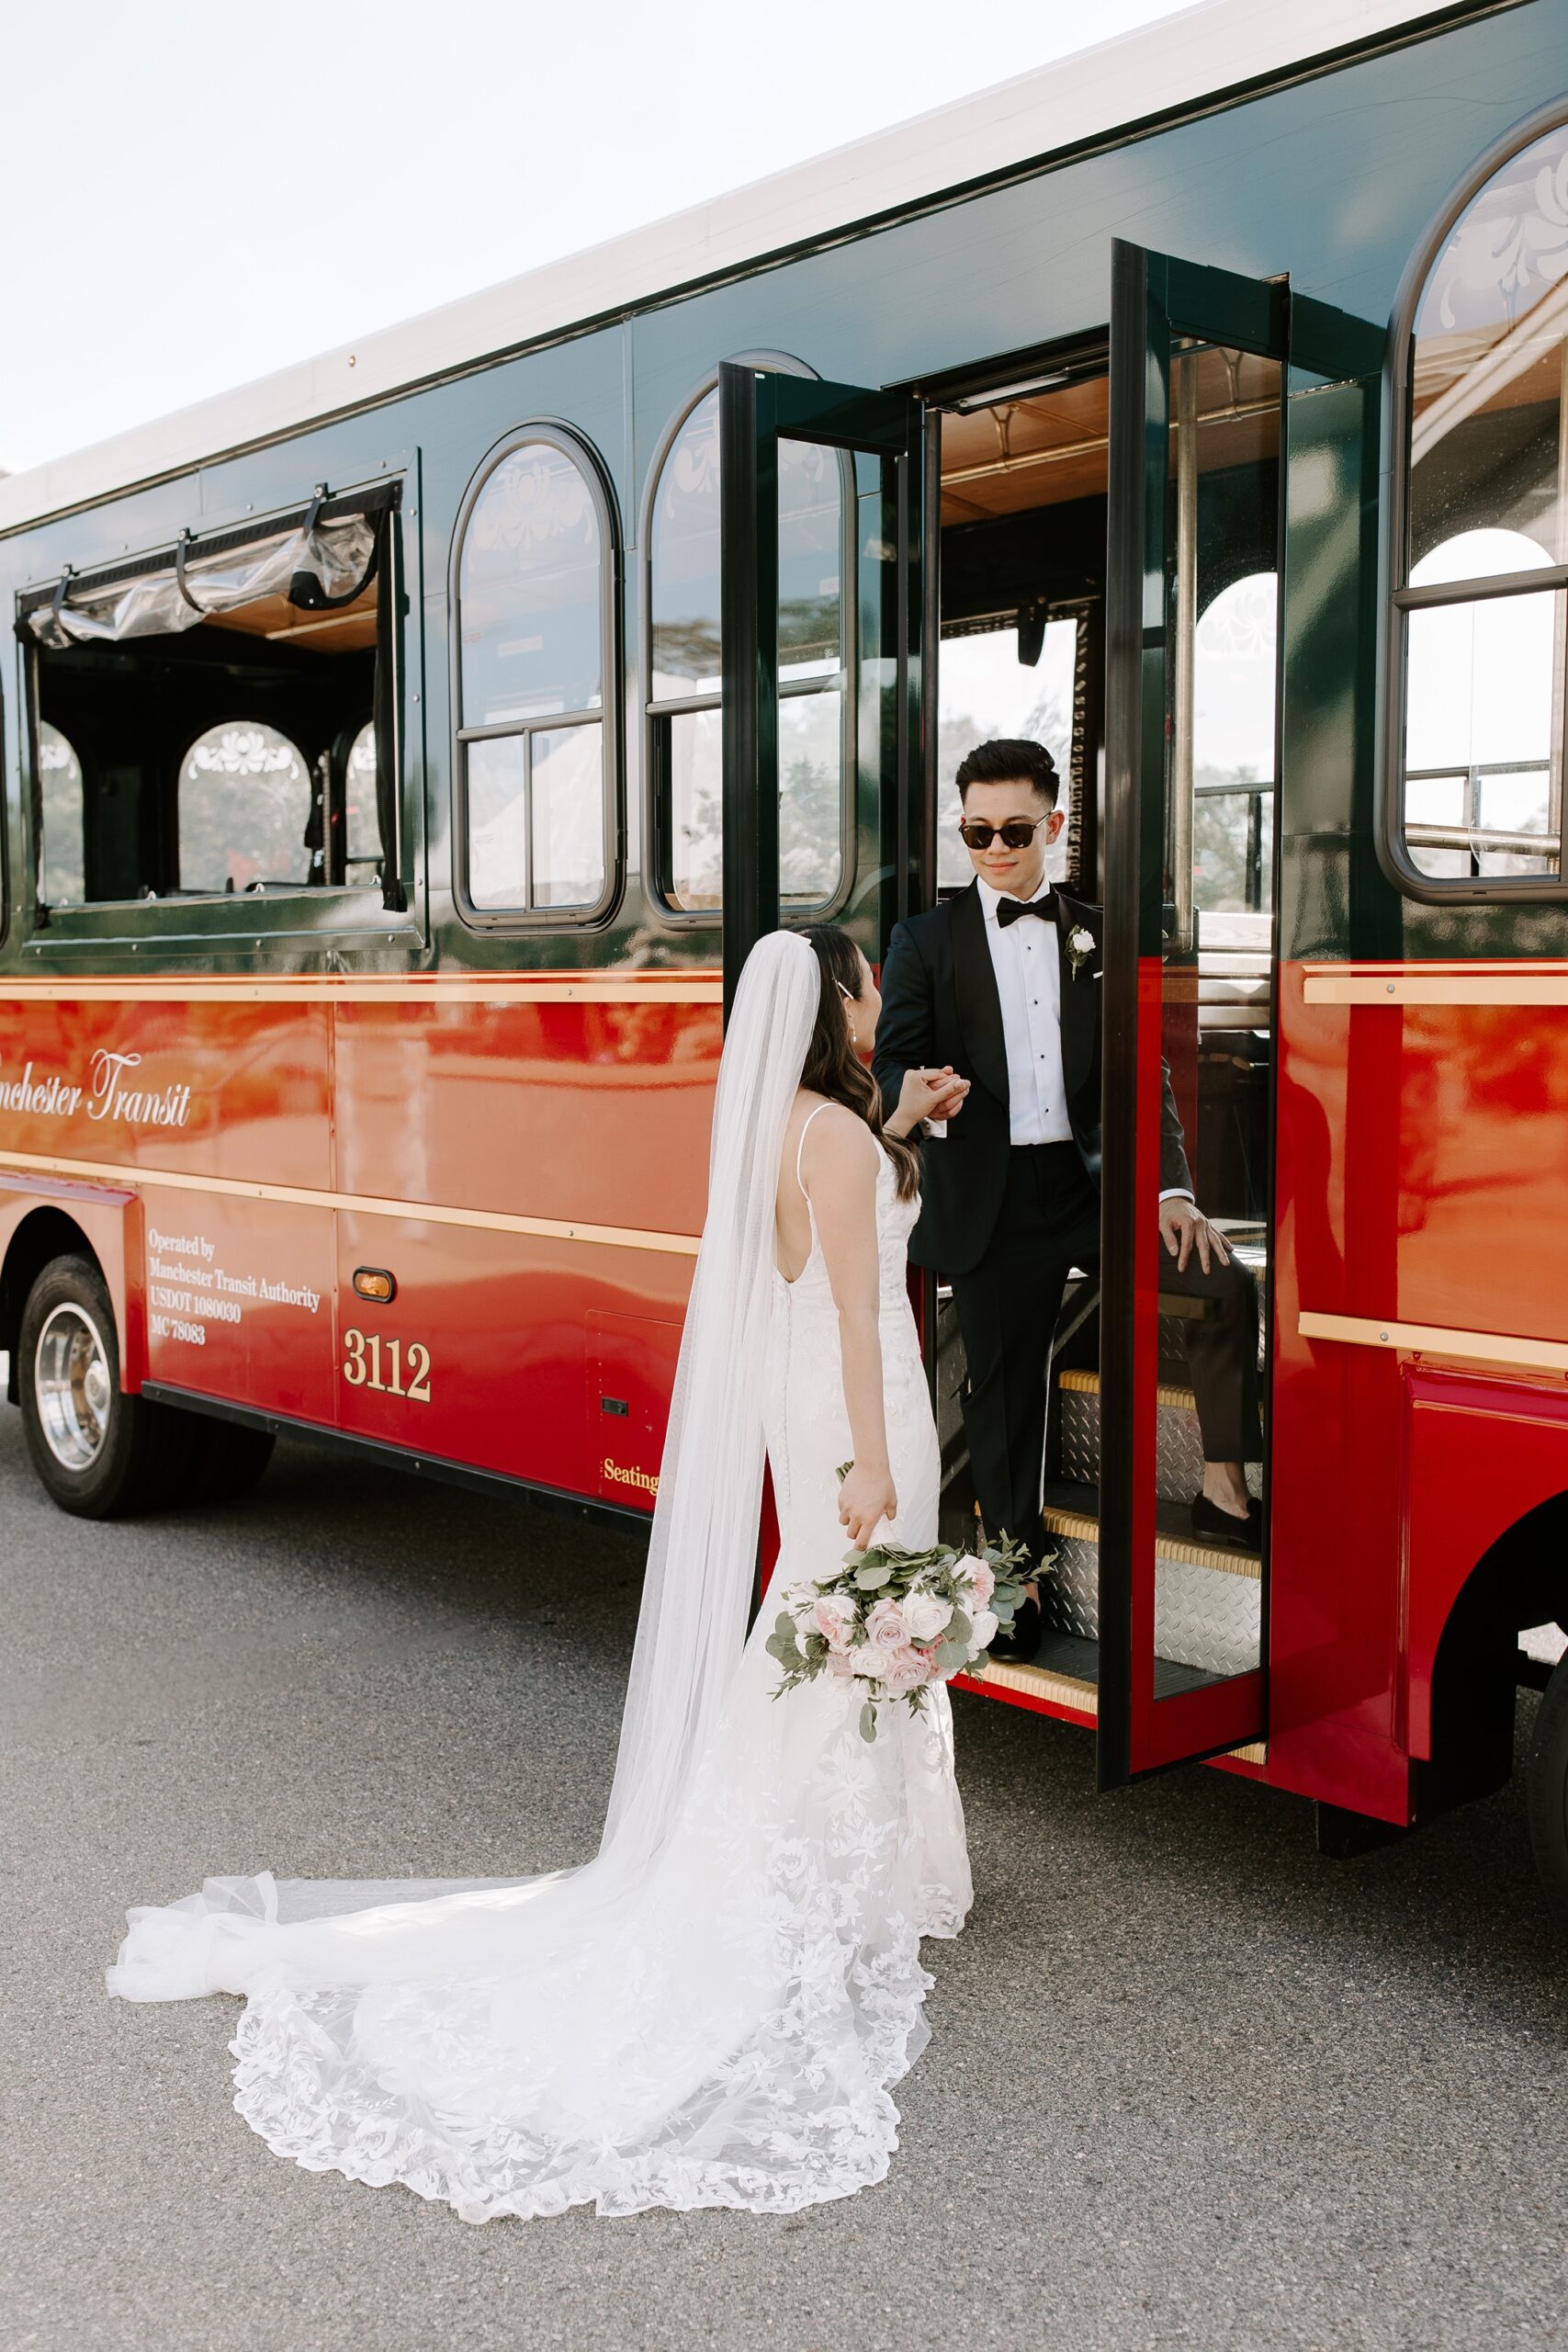 Bride and groom near trolley